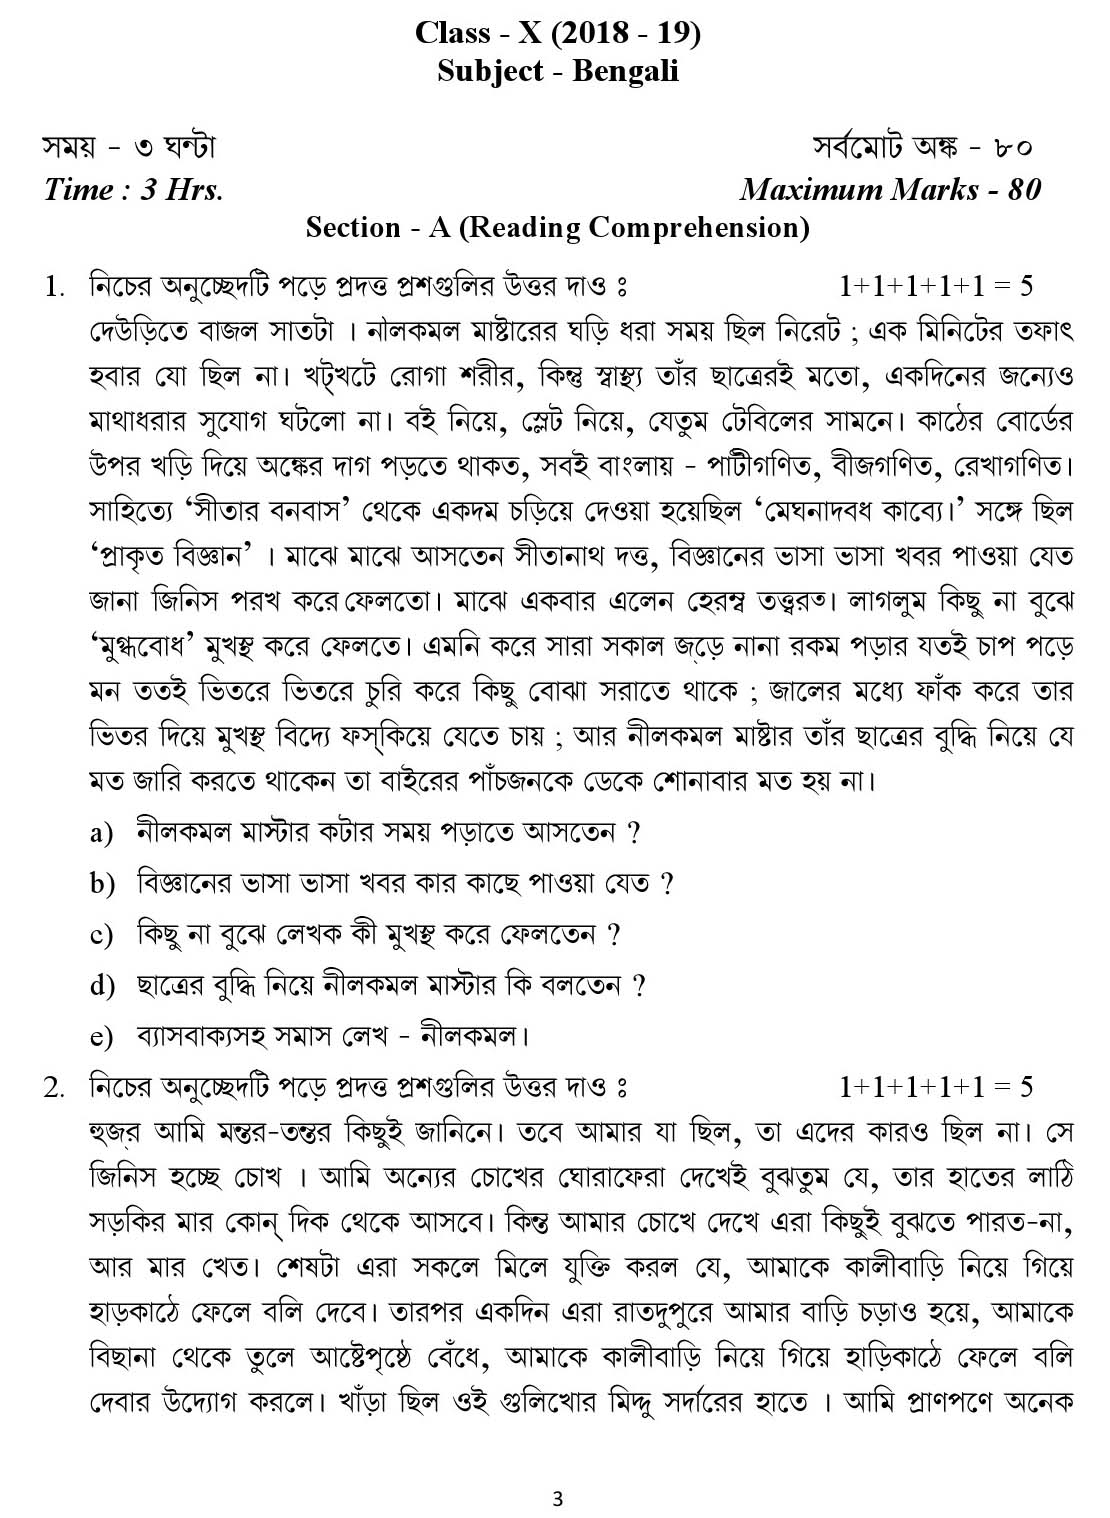 Bengali CBSE Class X Sample Question Paper 2018-19 - Image 3